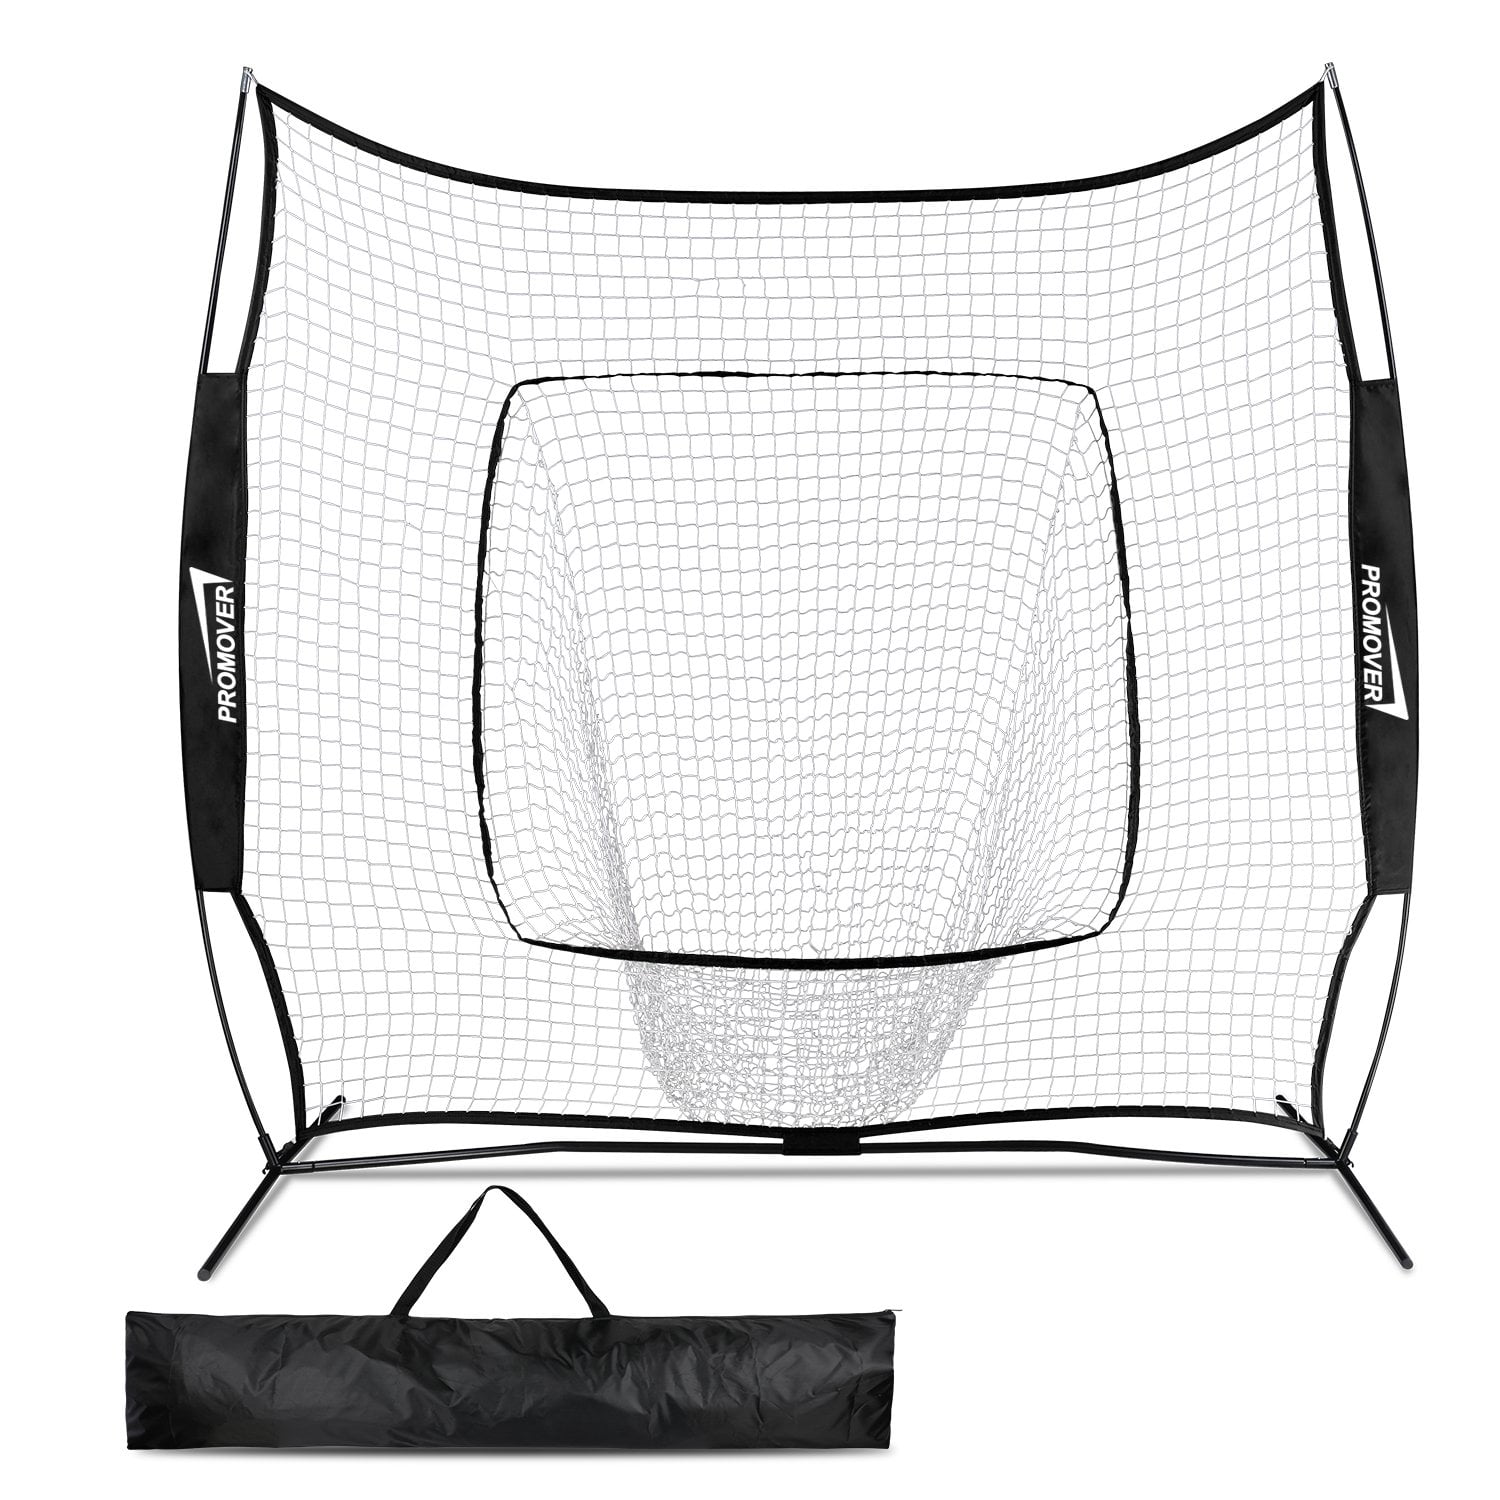 5x5 FT Bow Frame Baseball Softball Teeball Practice Batting Training Net W/Bag 